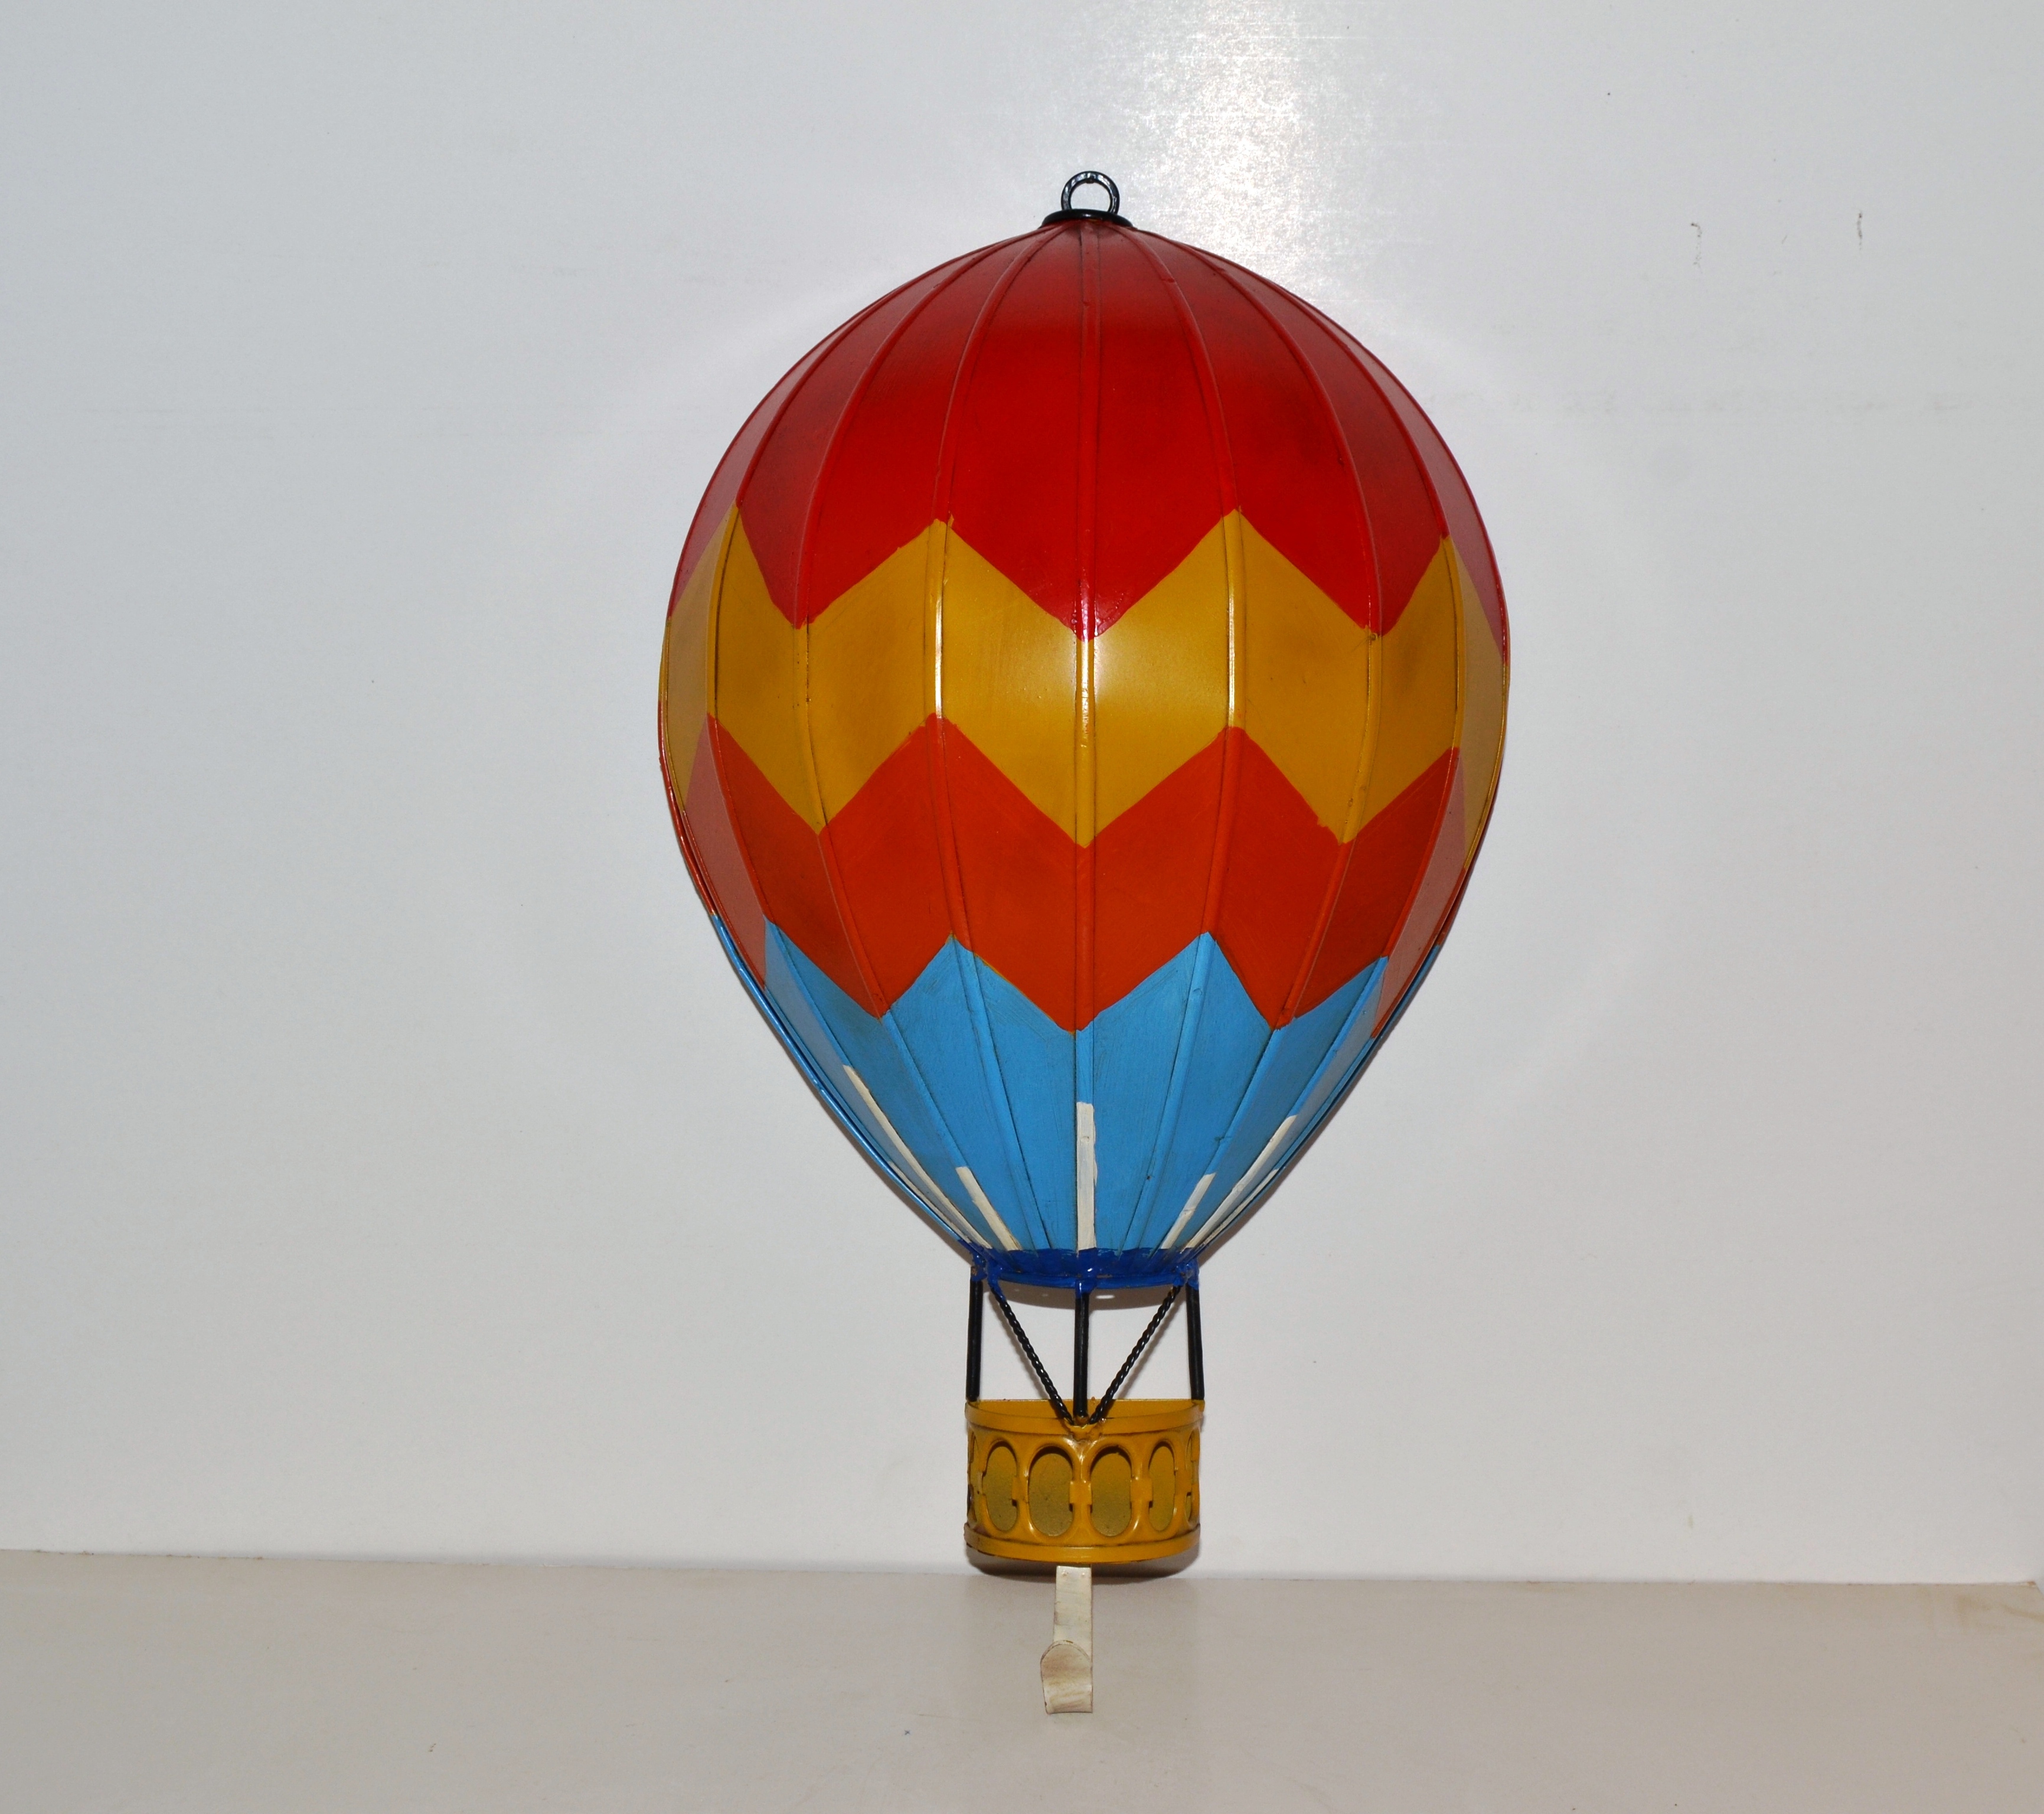 21 x 35 cm 37424 Heißluftballon Ballon Blechmodell Tin Model Vintage Balloon ca